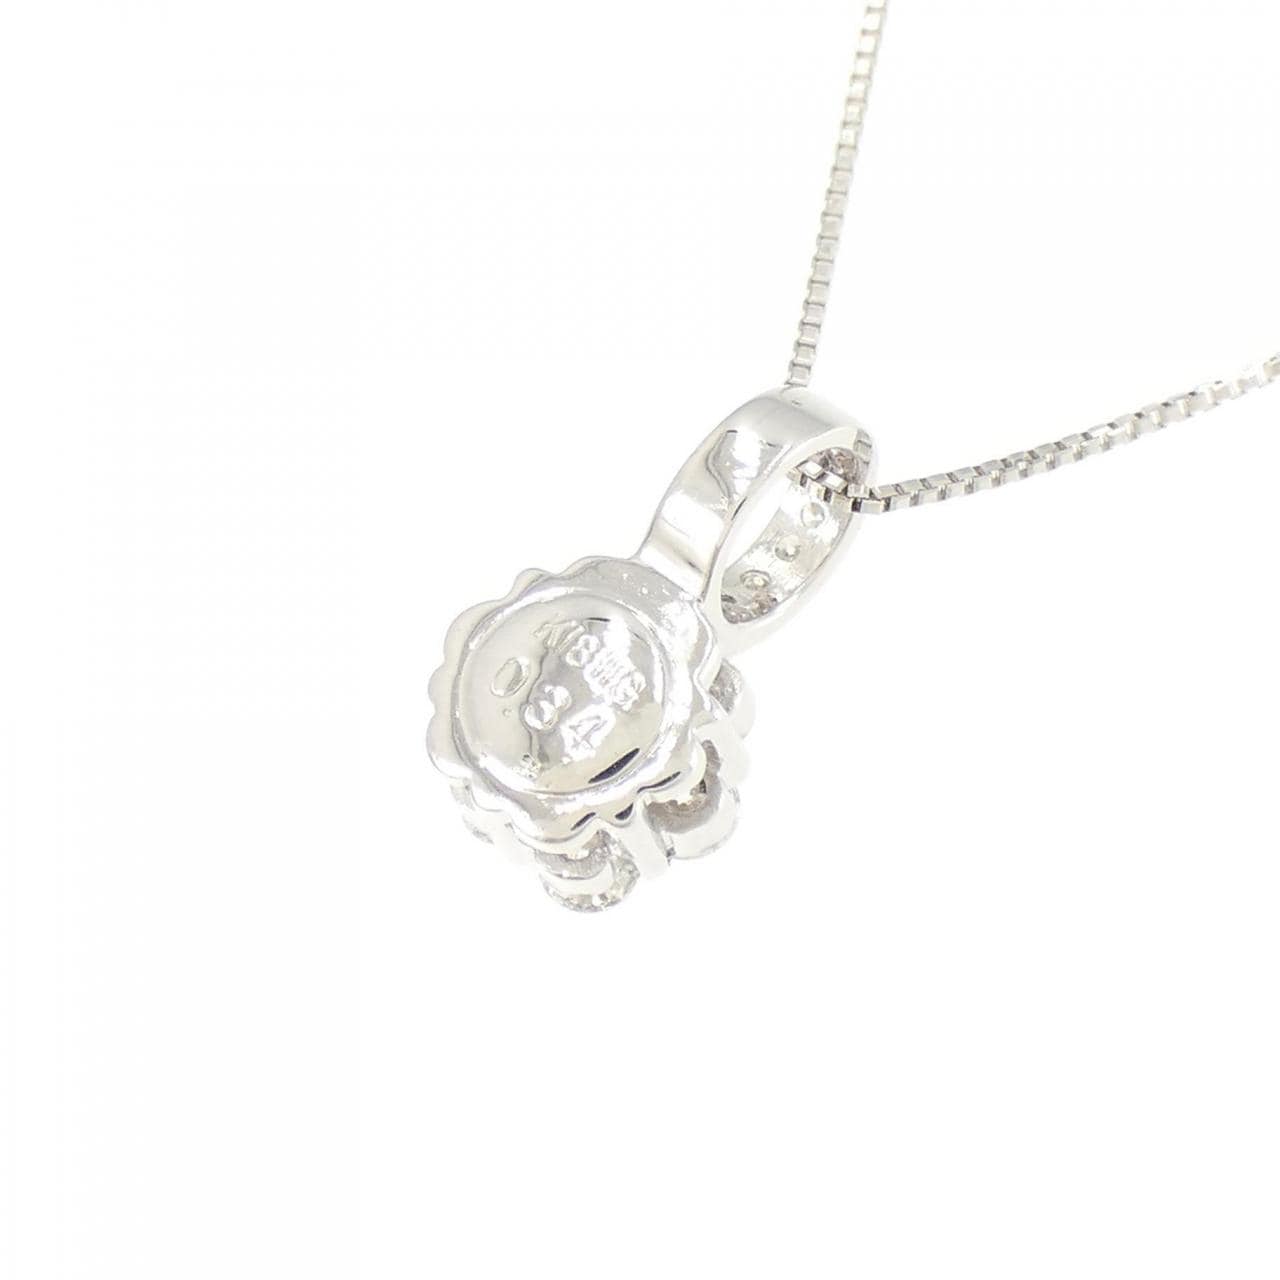 K18WG flower Diamond necklace 0.34CT